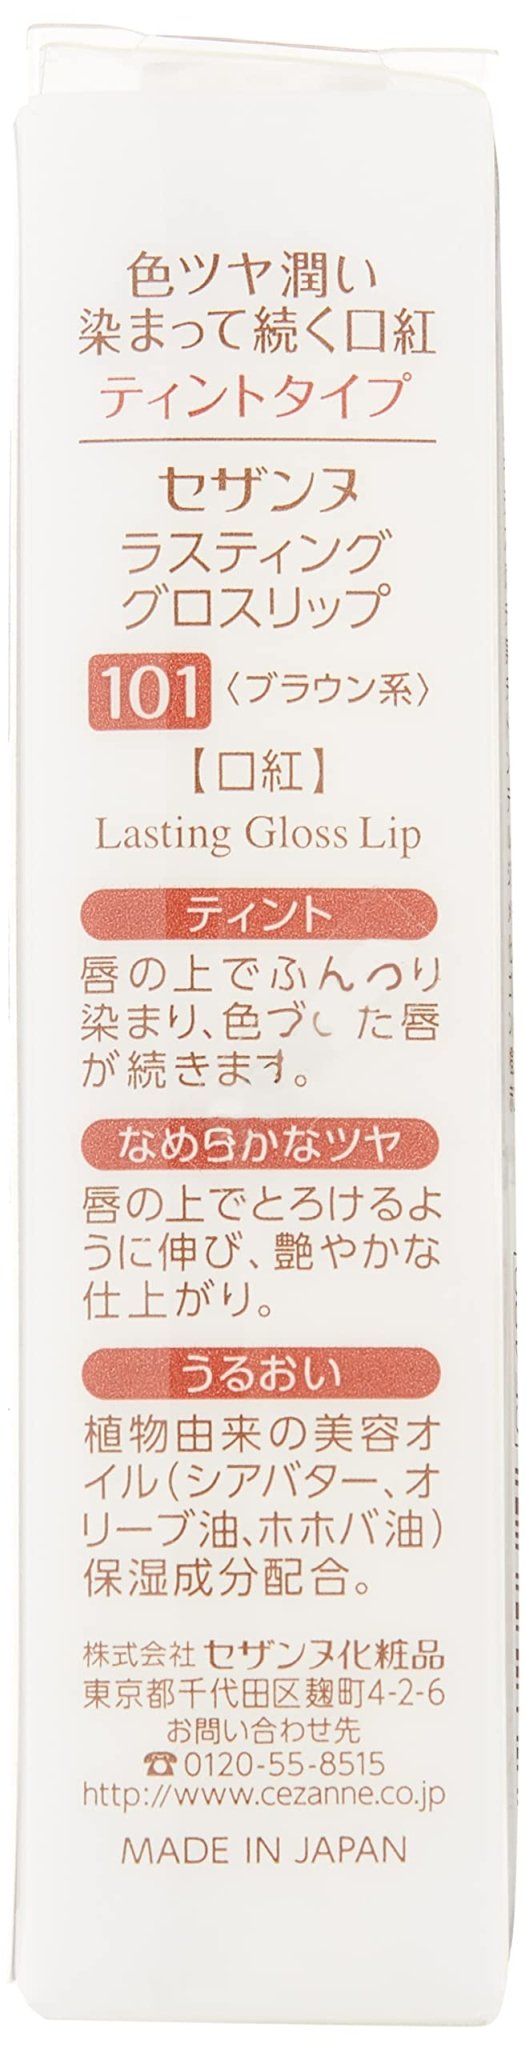 Cezanne Lasting Gloss Lip 101 Brown 3.2G Lipstick for Long - Lasting Wear